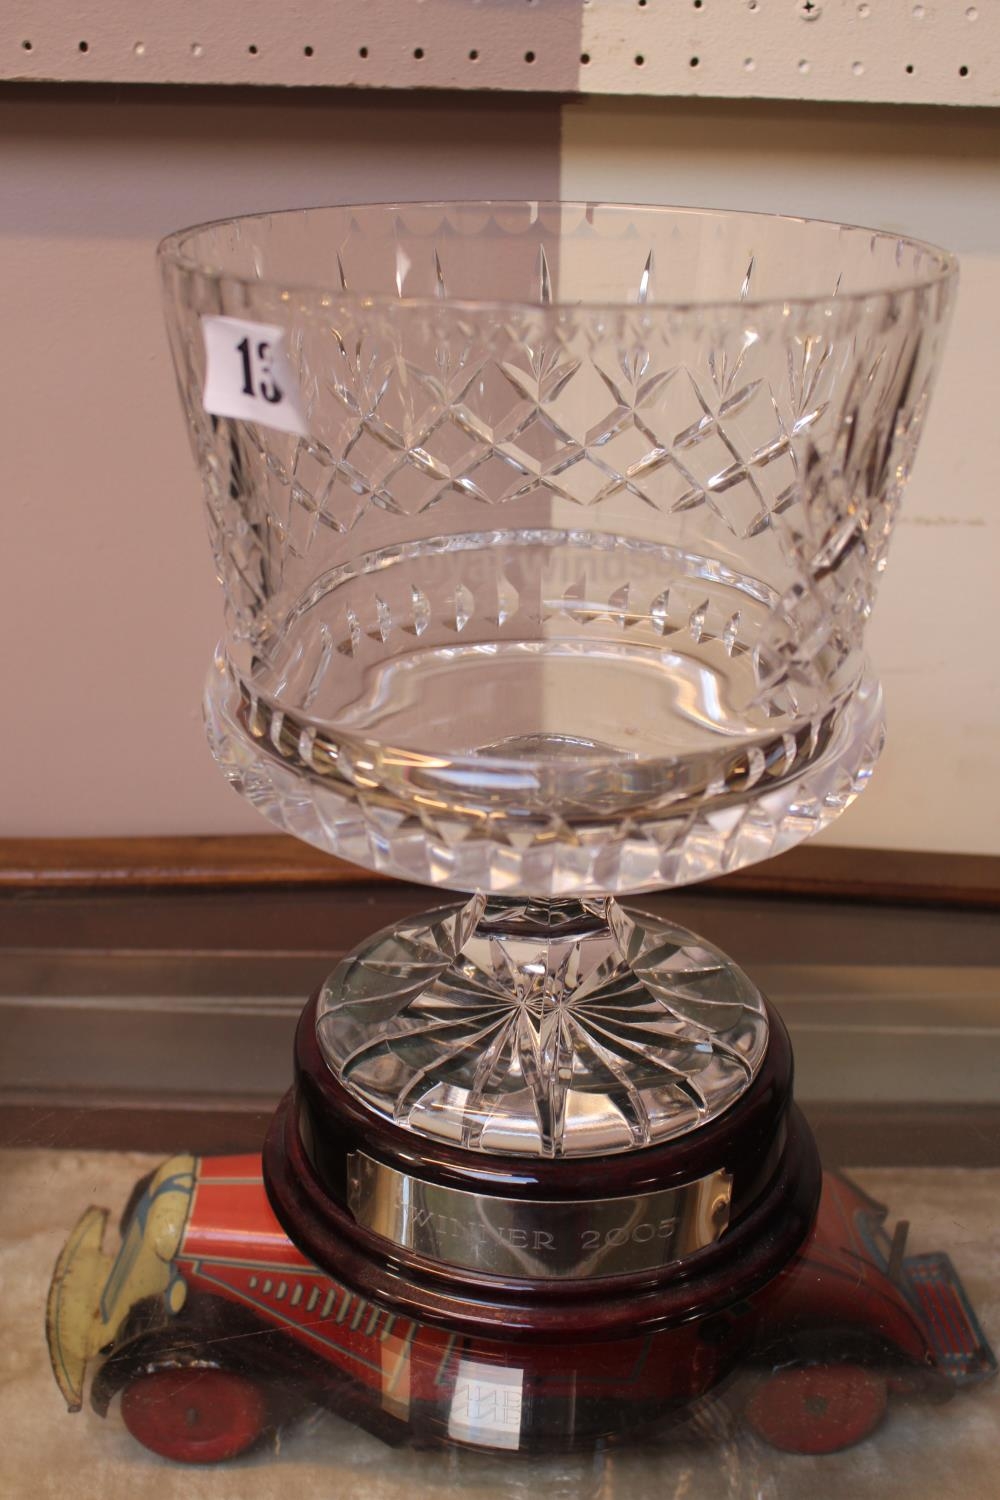 Large Cut Glass Cystal Windsor horse Race Trophy Winner 2005 on plinth .26.5cm in Height - Image 2 of 2